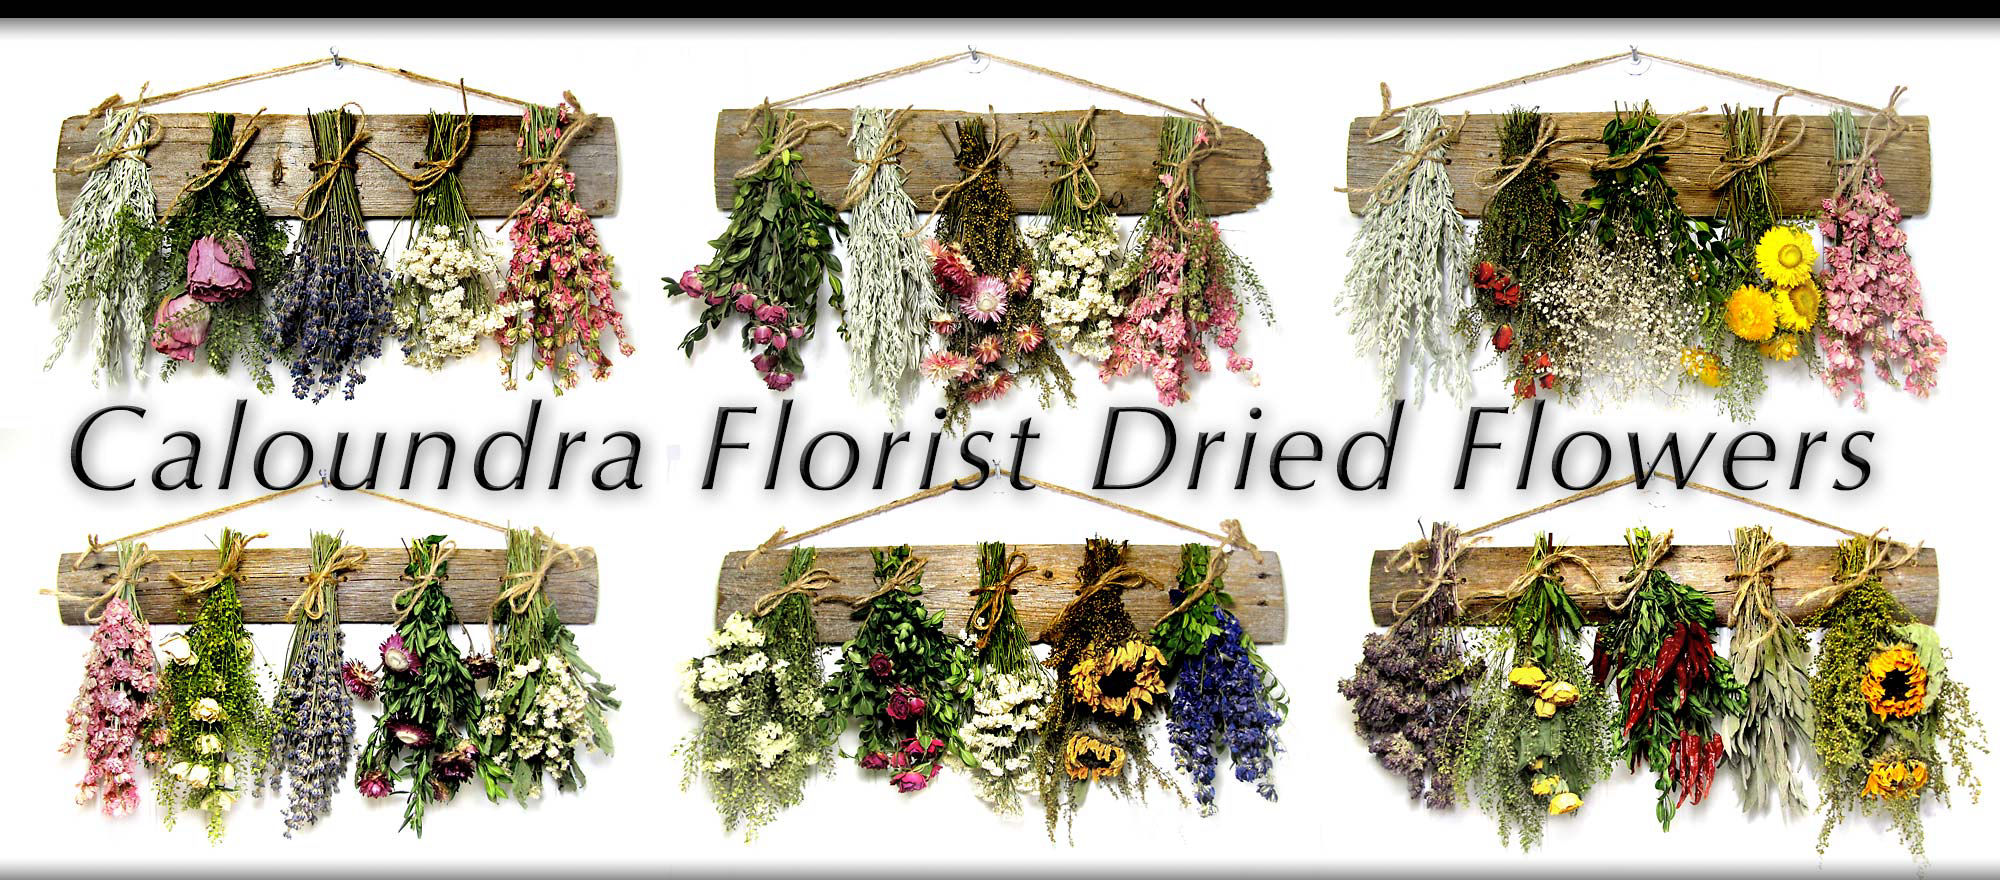 CALOUNDRA FLORIST DRIED FLOWERS